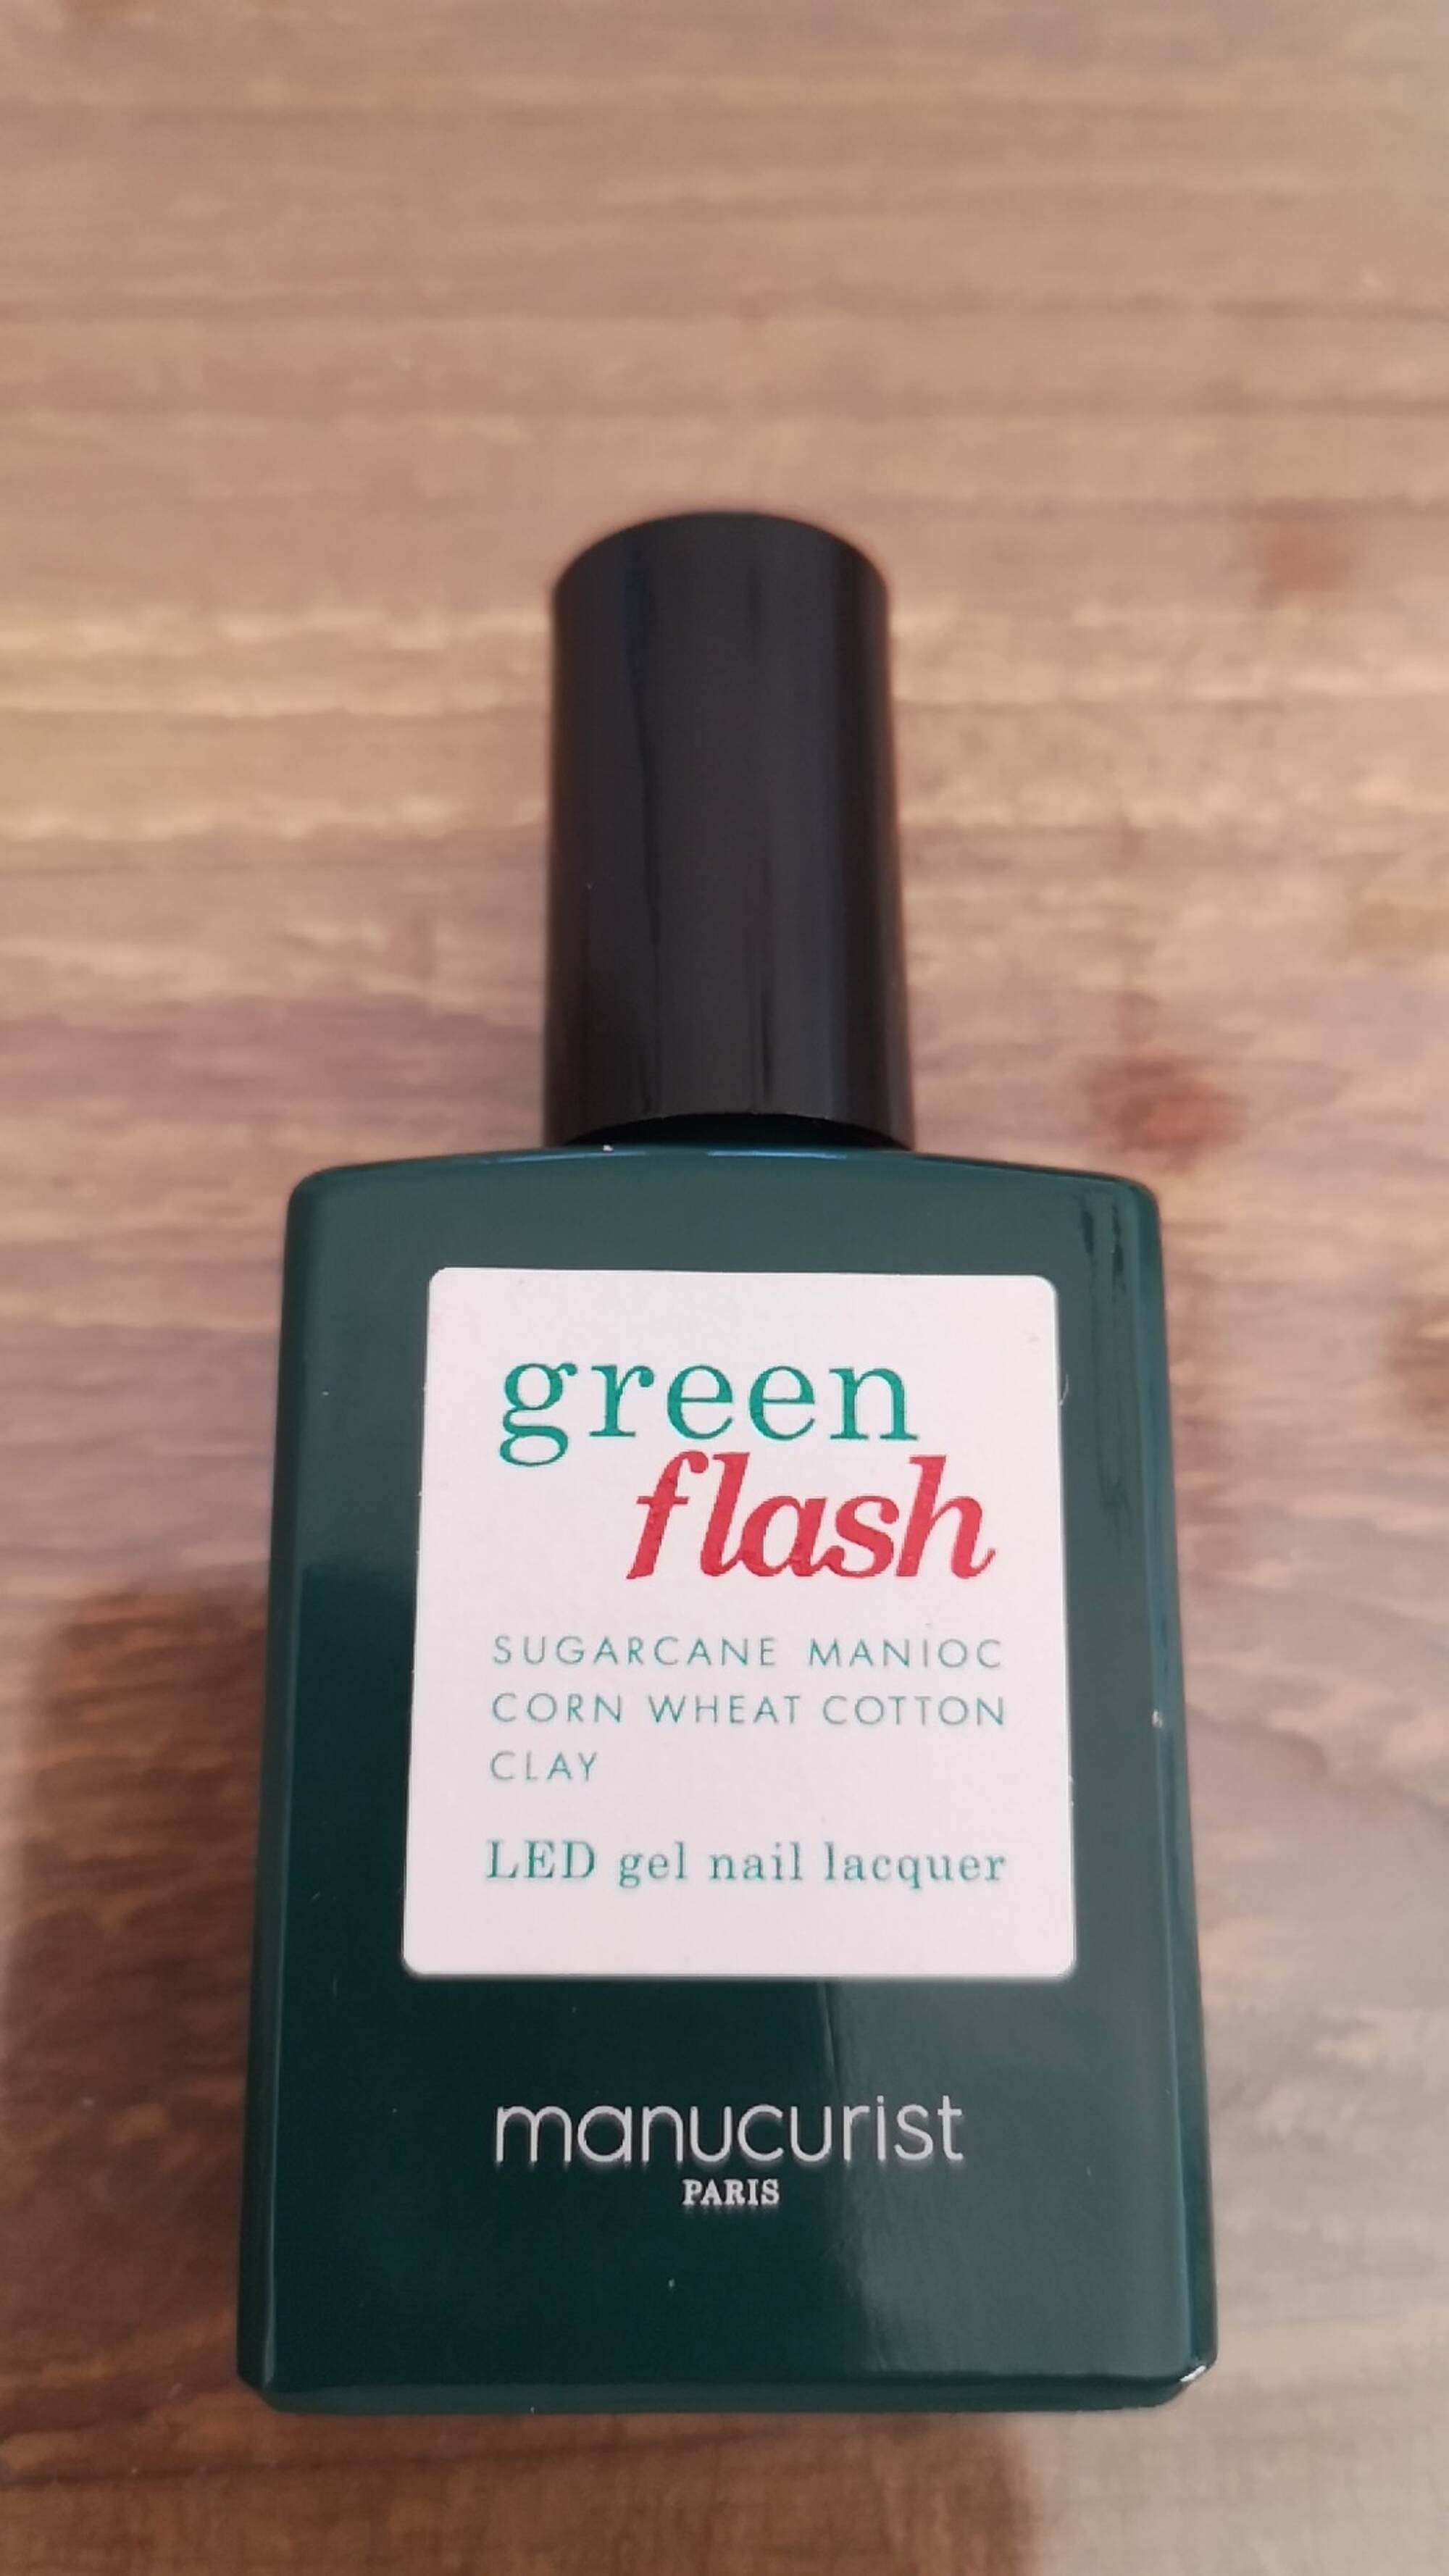 MANUCURIST PARIS - Green flash - Led gel nail lacquer